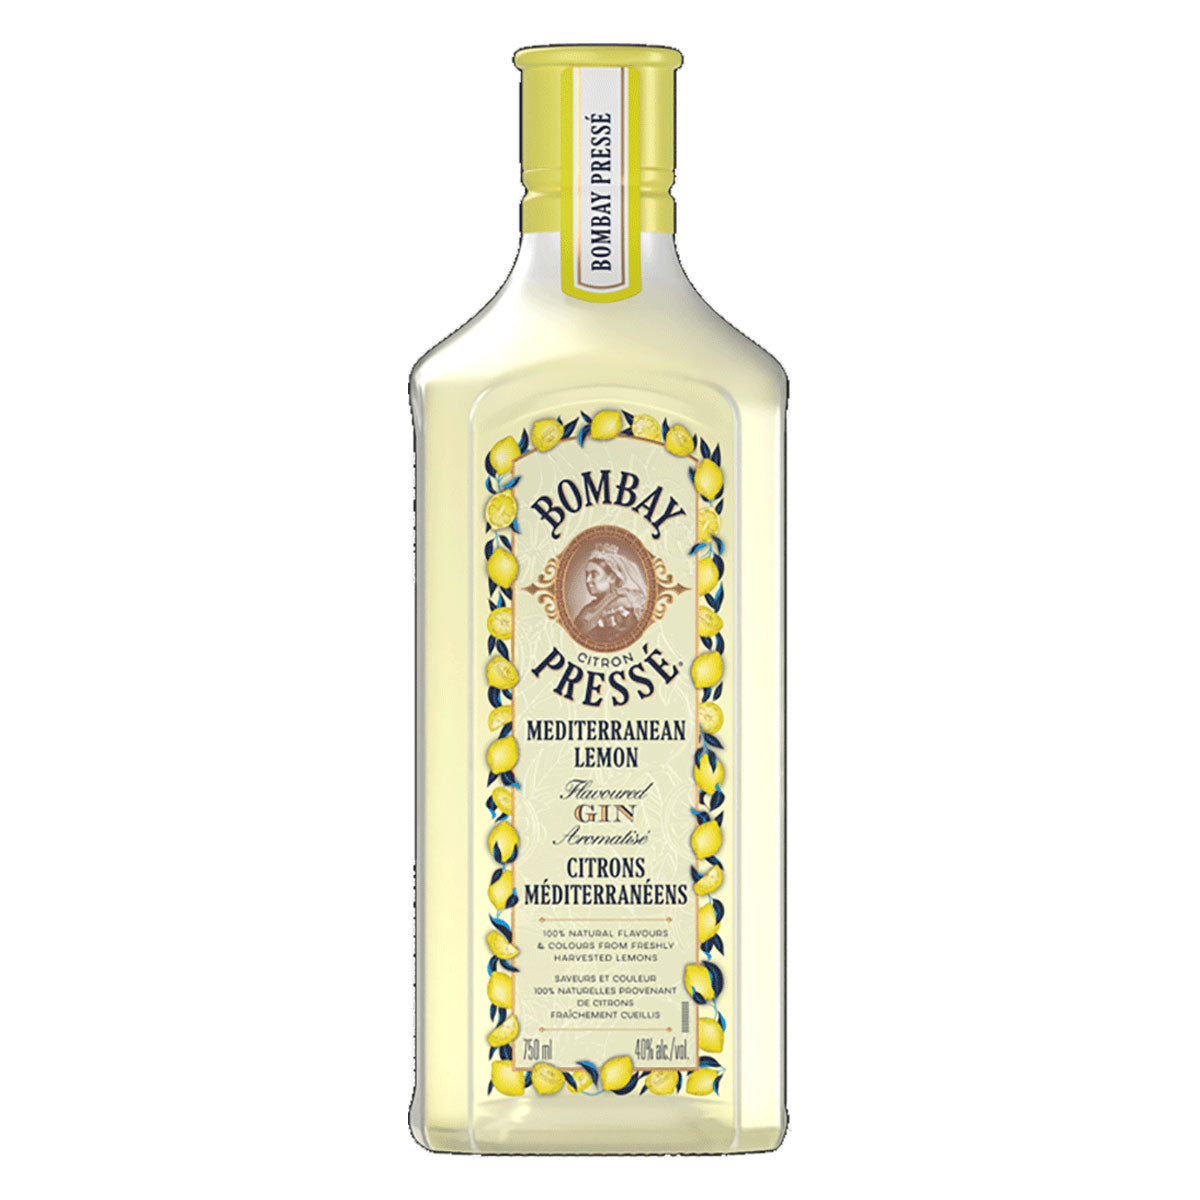 Bombay Presse Citron 750ml Lemon Gin – Mediterranean